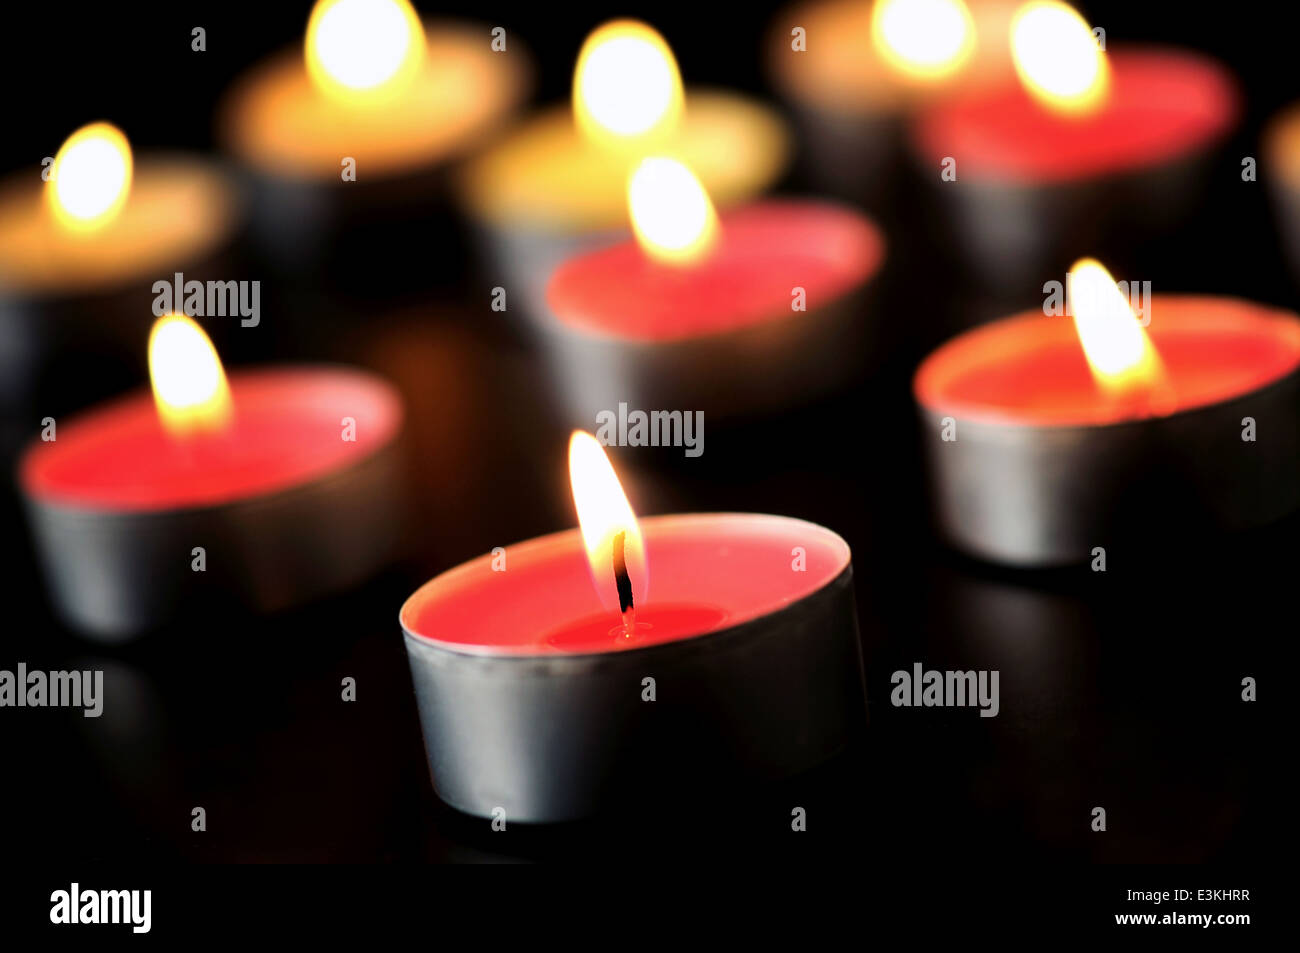 Group of candles burning on black Stock Photo